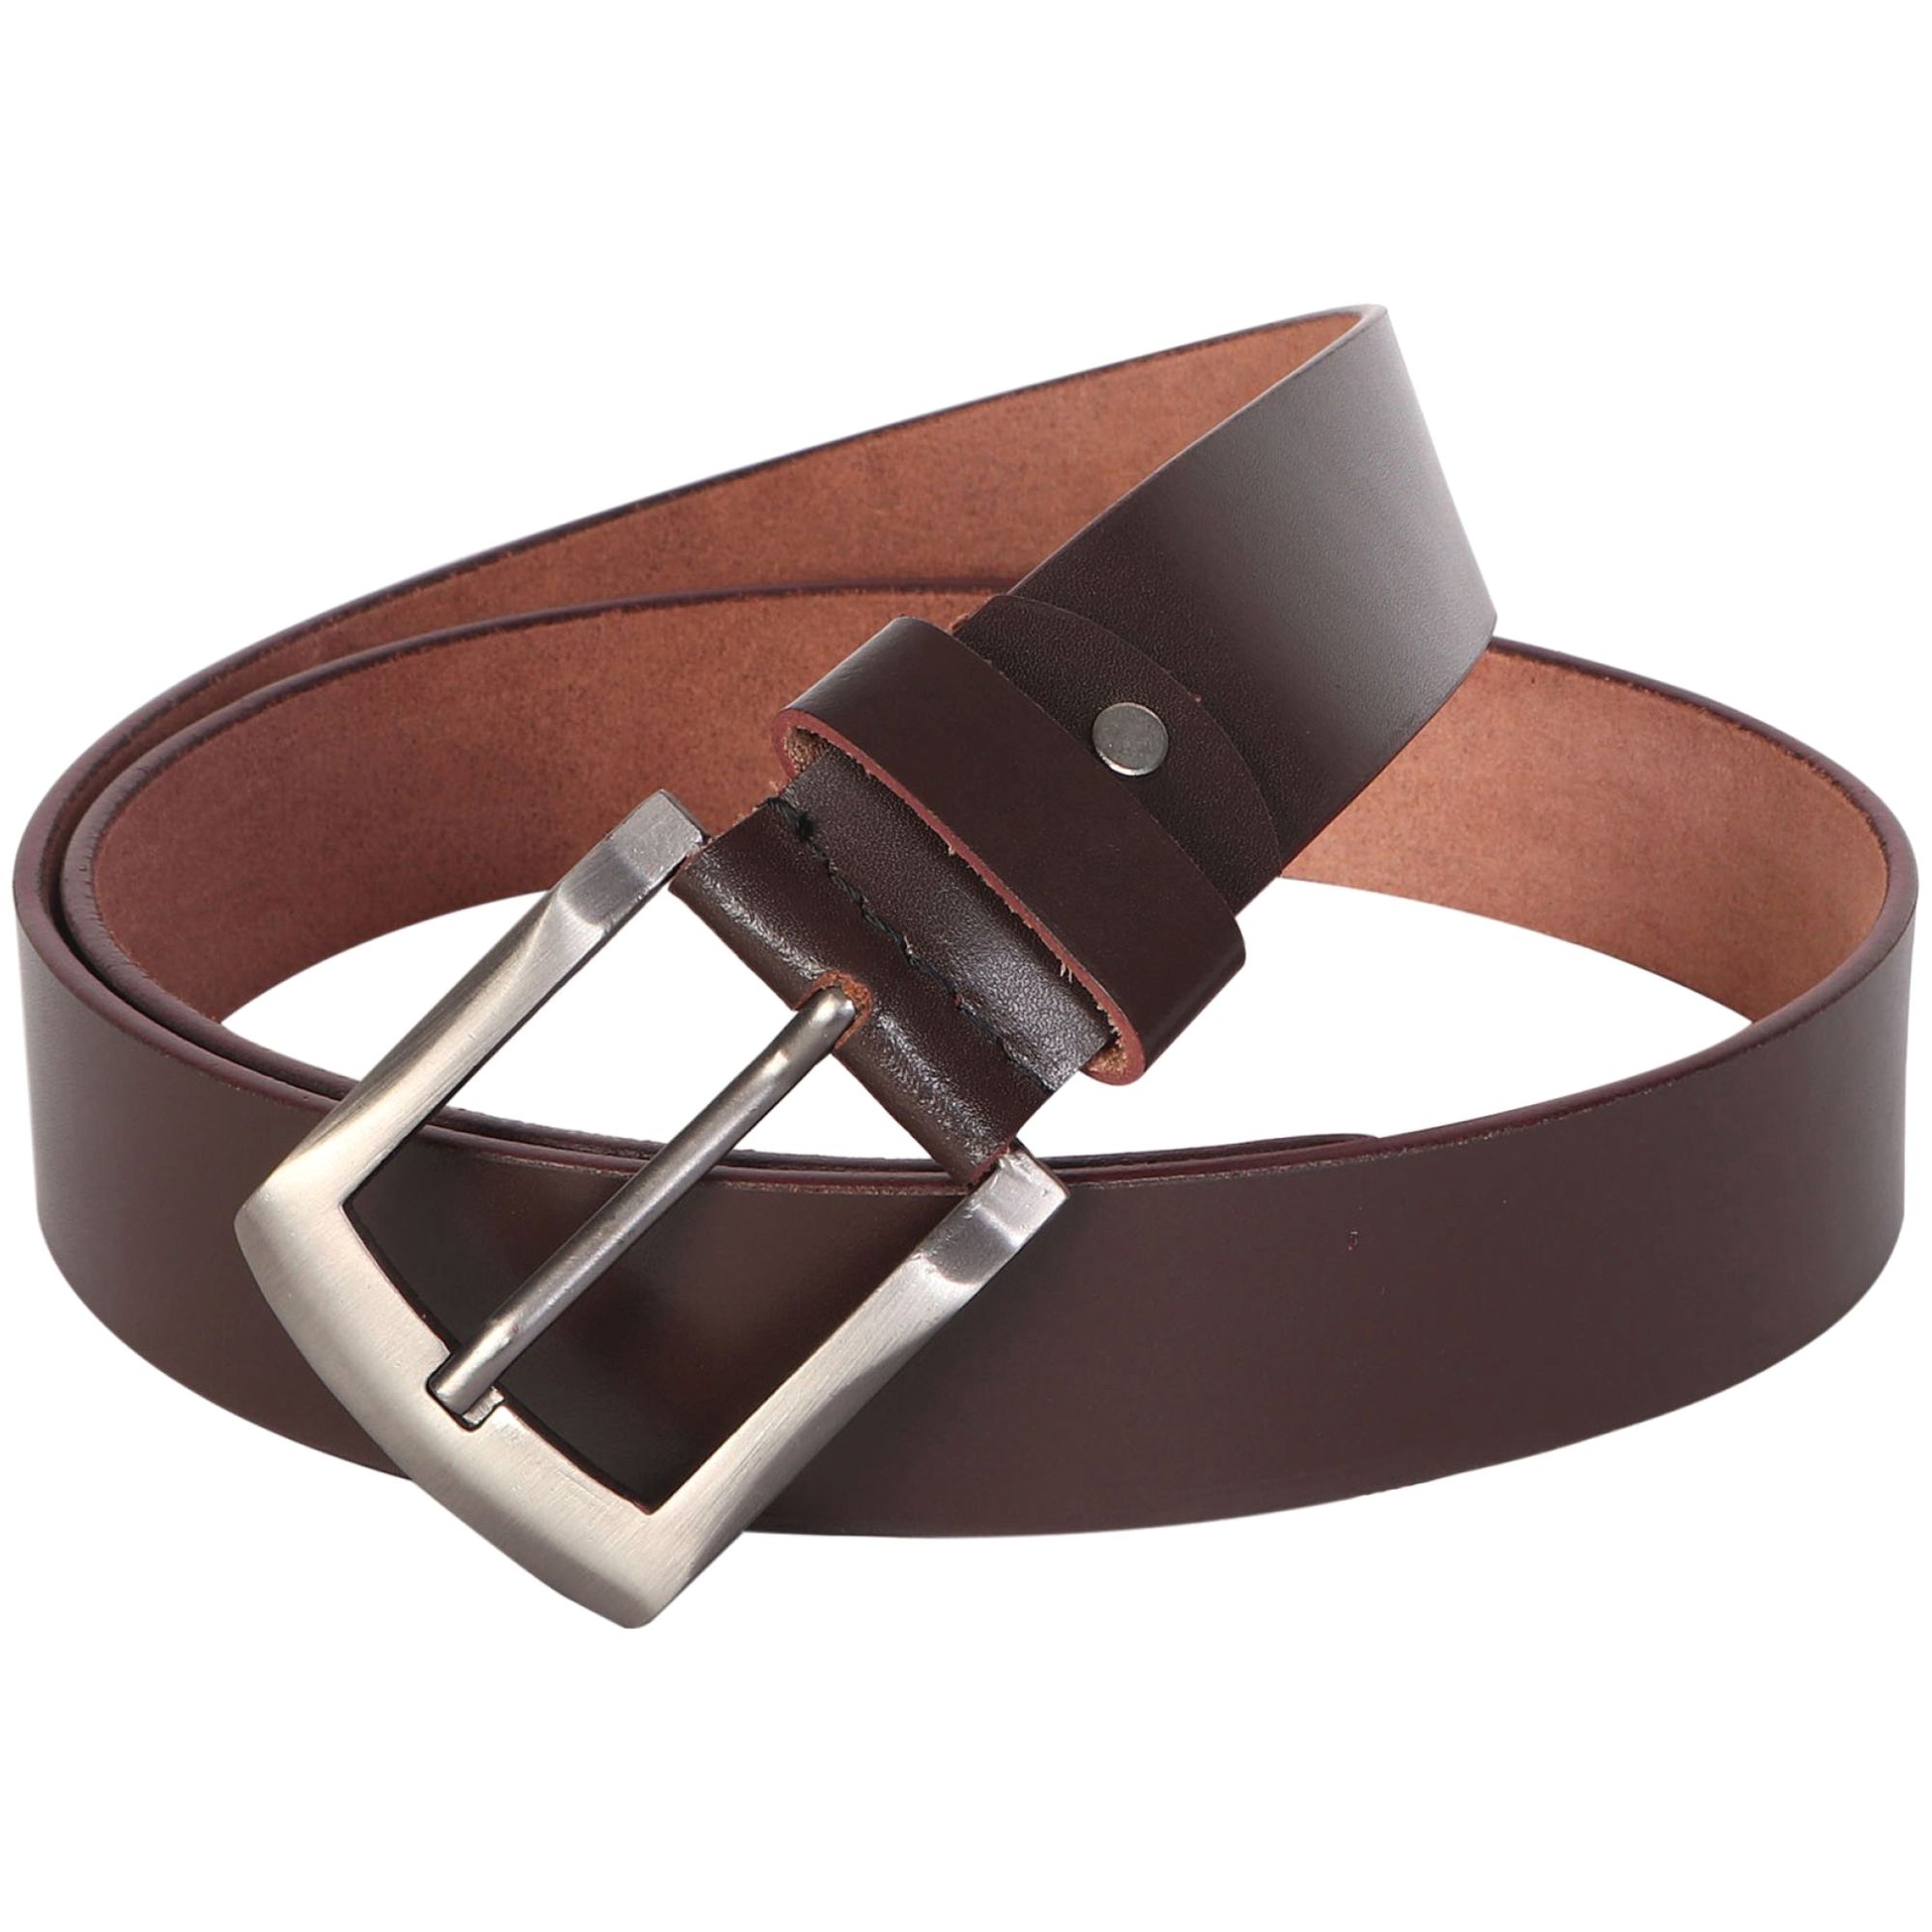 Debonair International Men Formal Genuine Leather Belt, DI934307, Brown